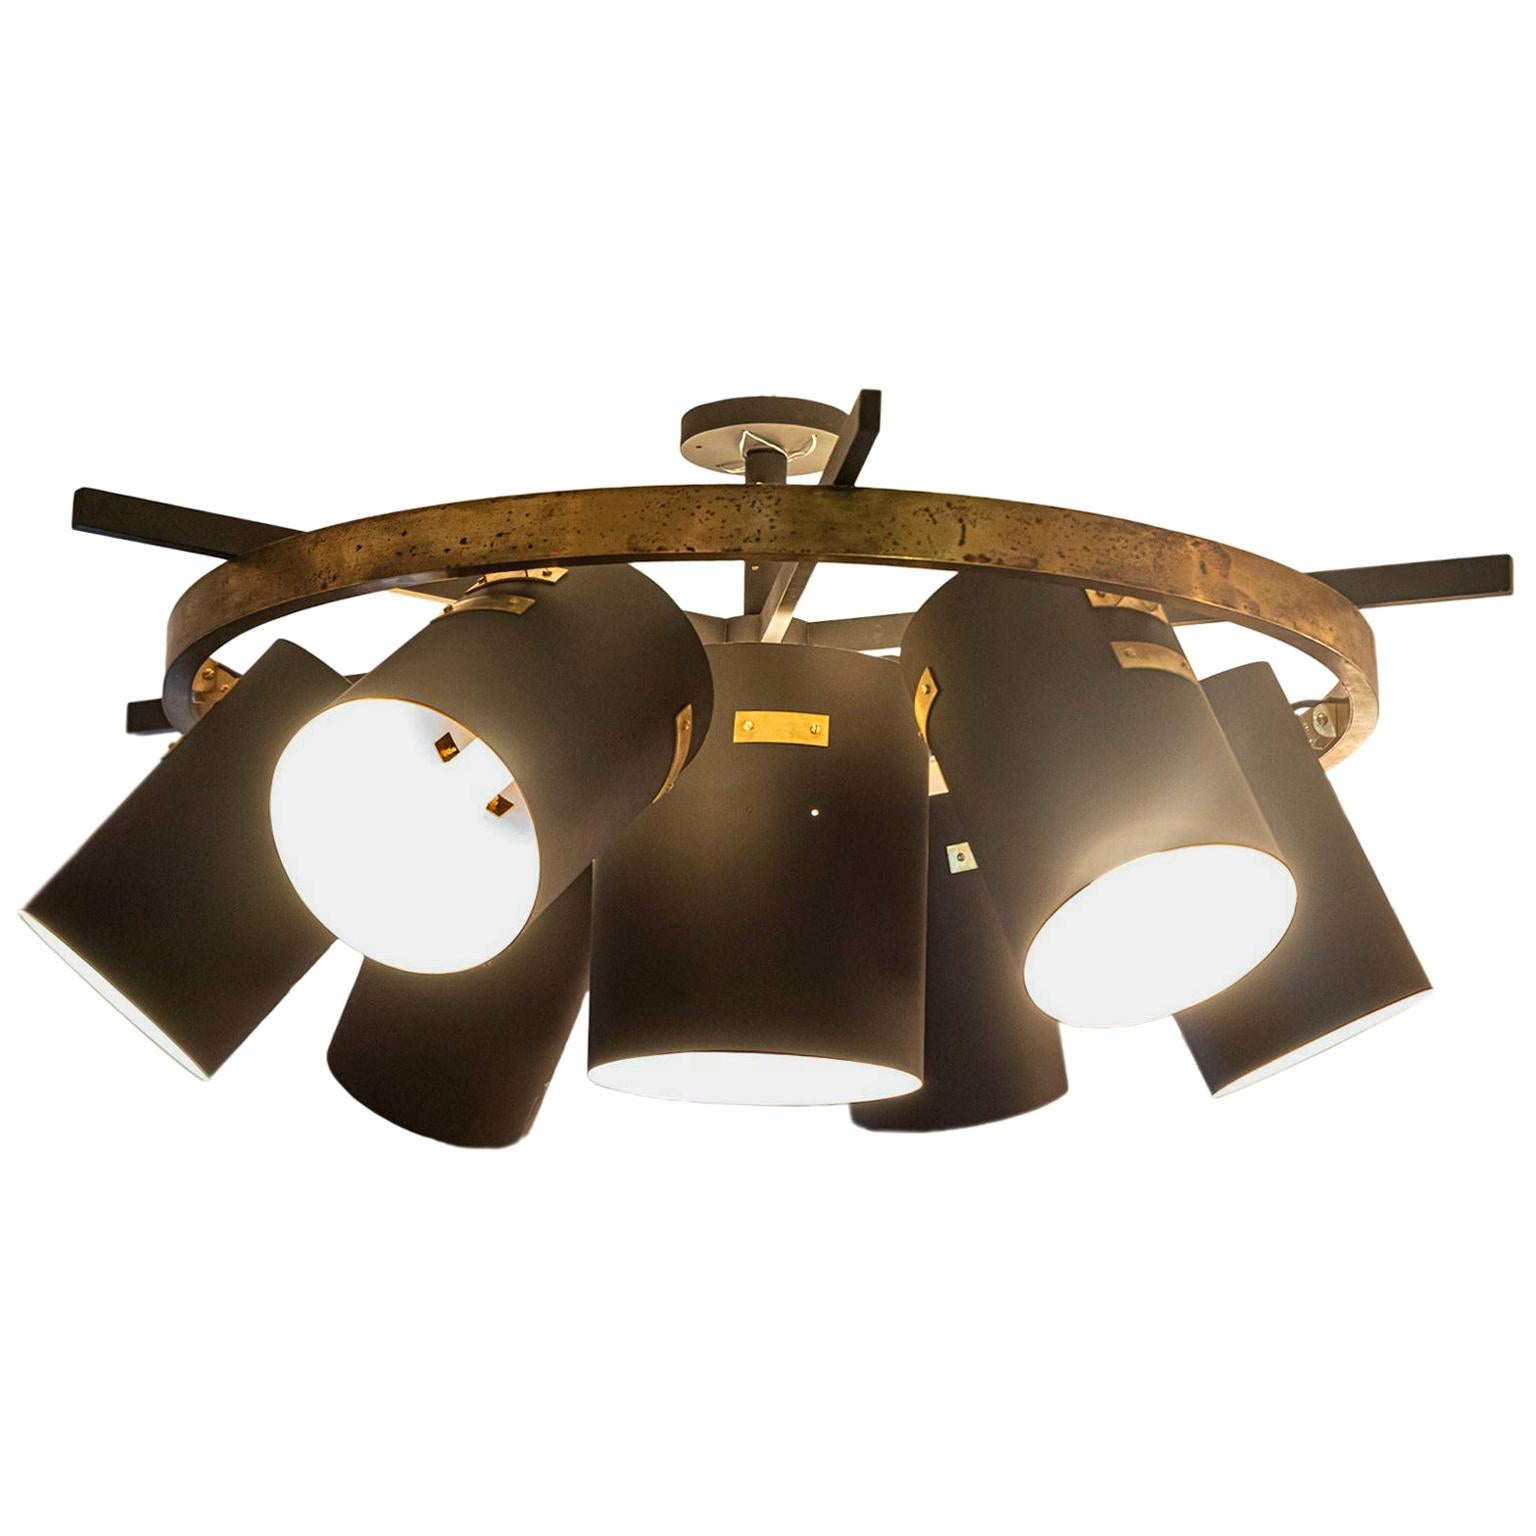 Attributed to Stilnovo (1946-1988), pair of large chandeliers,
Brass, enameled metal,
Prod. Stilnovo,
Italy, circa 1955.

Measures: Height 54 cm, diameter 138 cm.